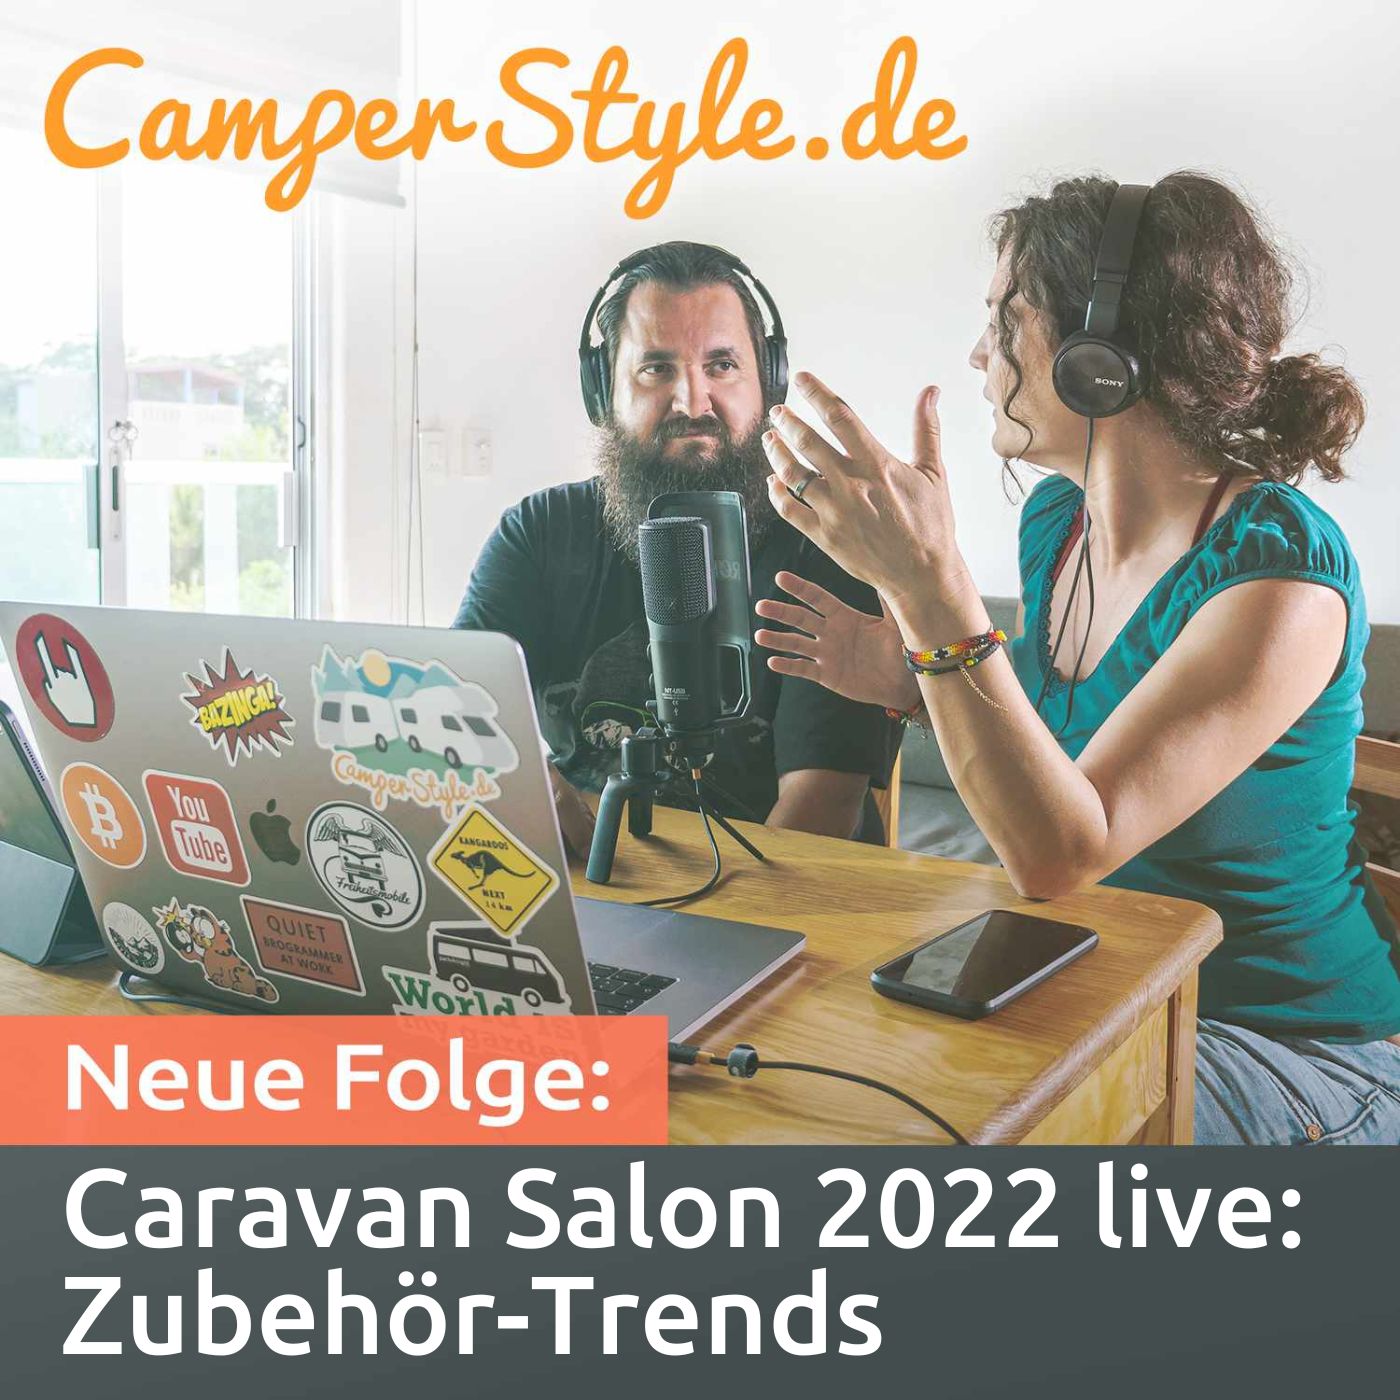 Caravan Salon 2022 live: Zubehör-Trends